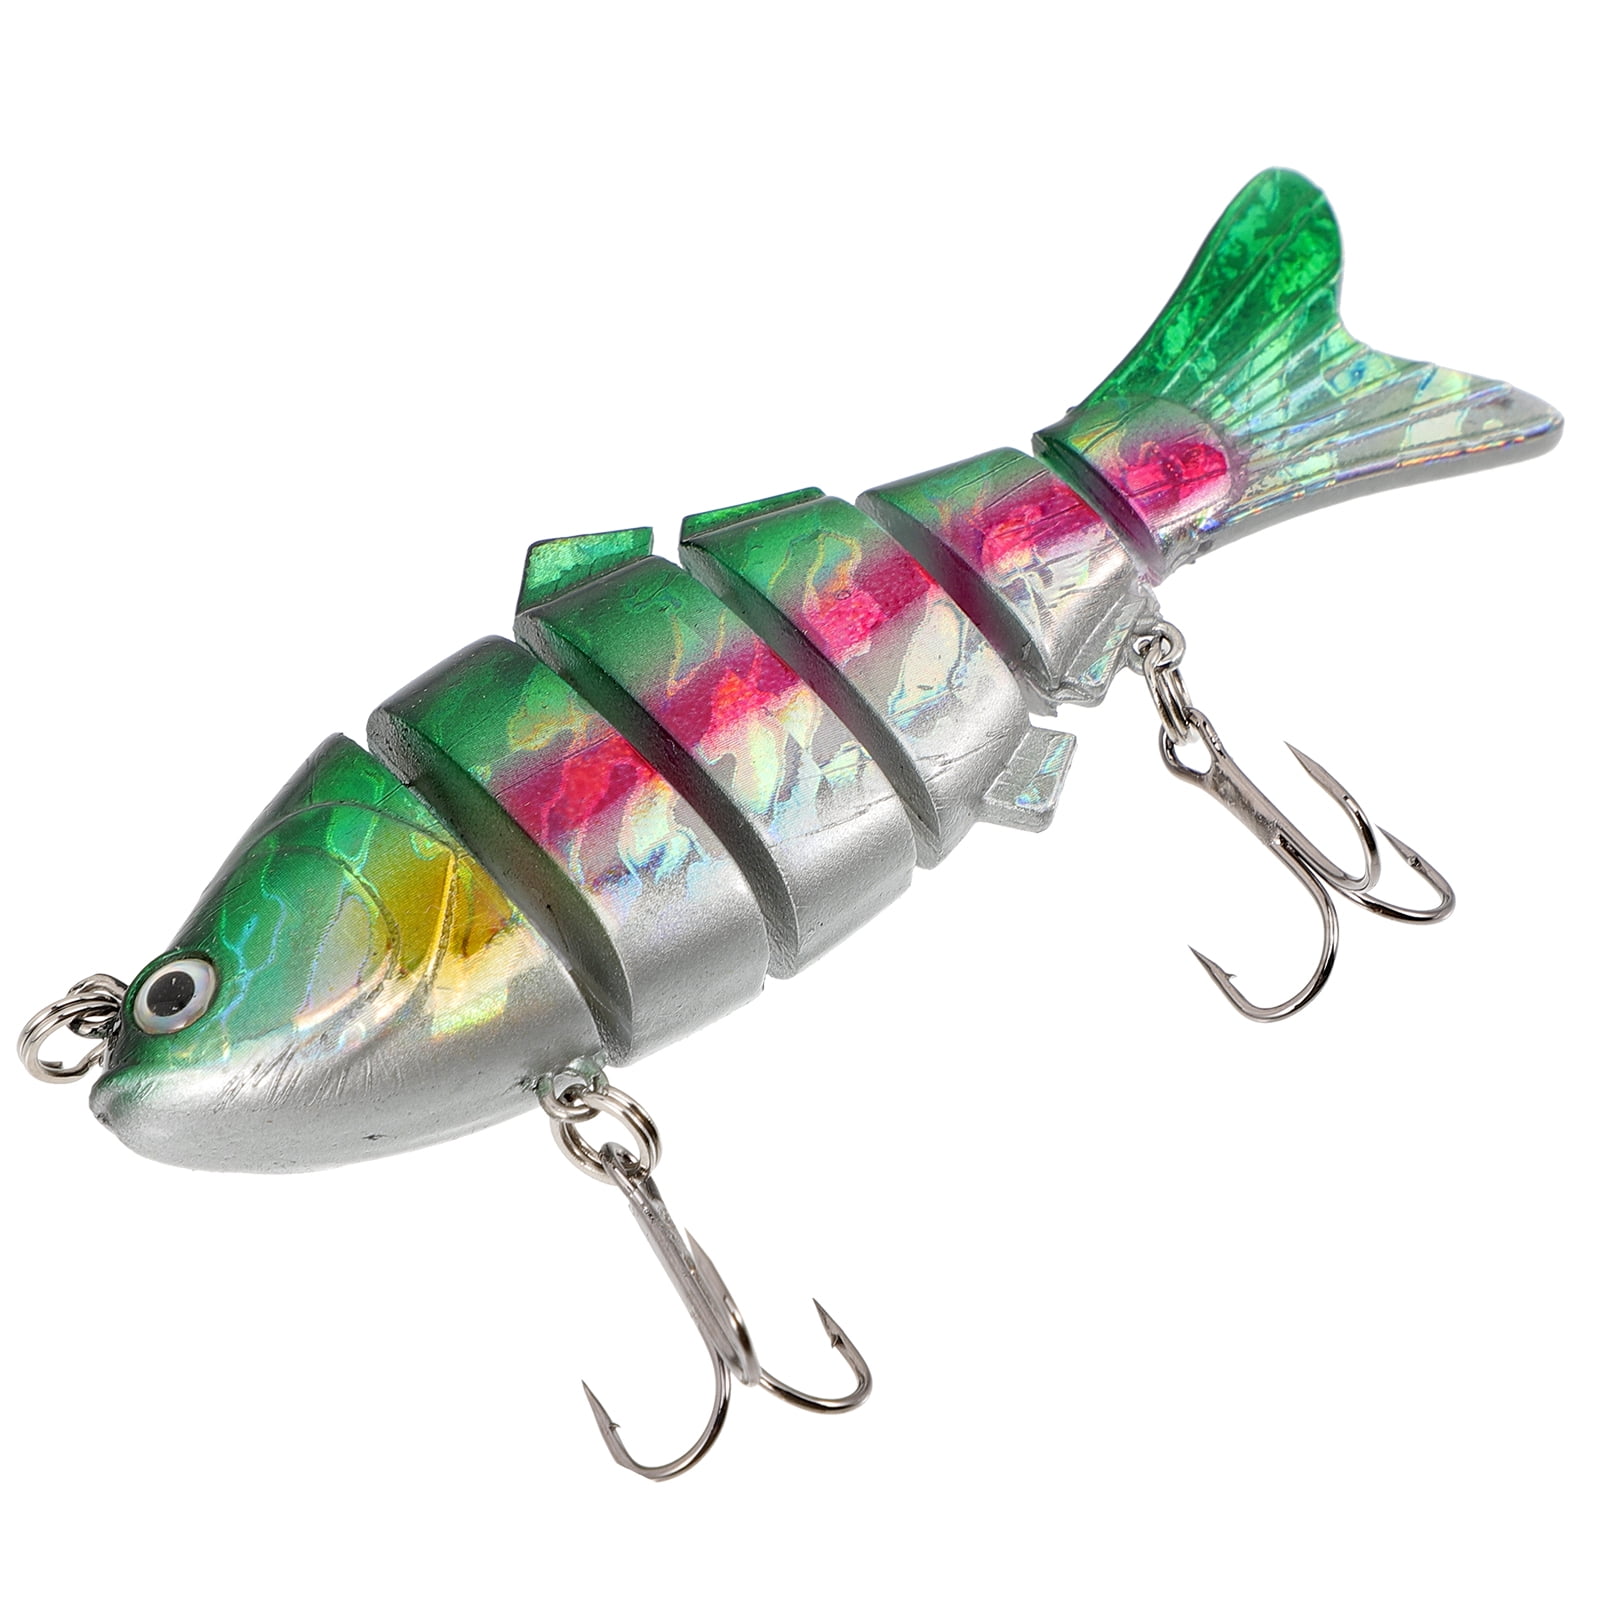 UDIYO Fishing Hook Sharp Strong Penetration Colorful 12.6g Bionic